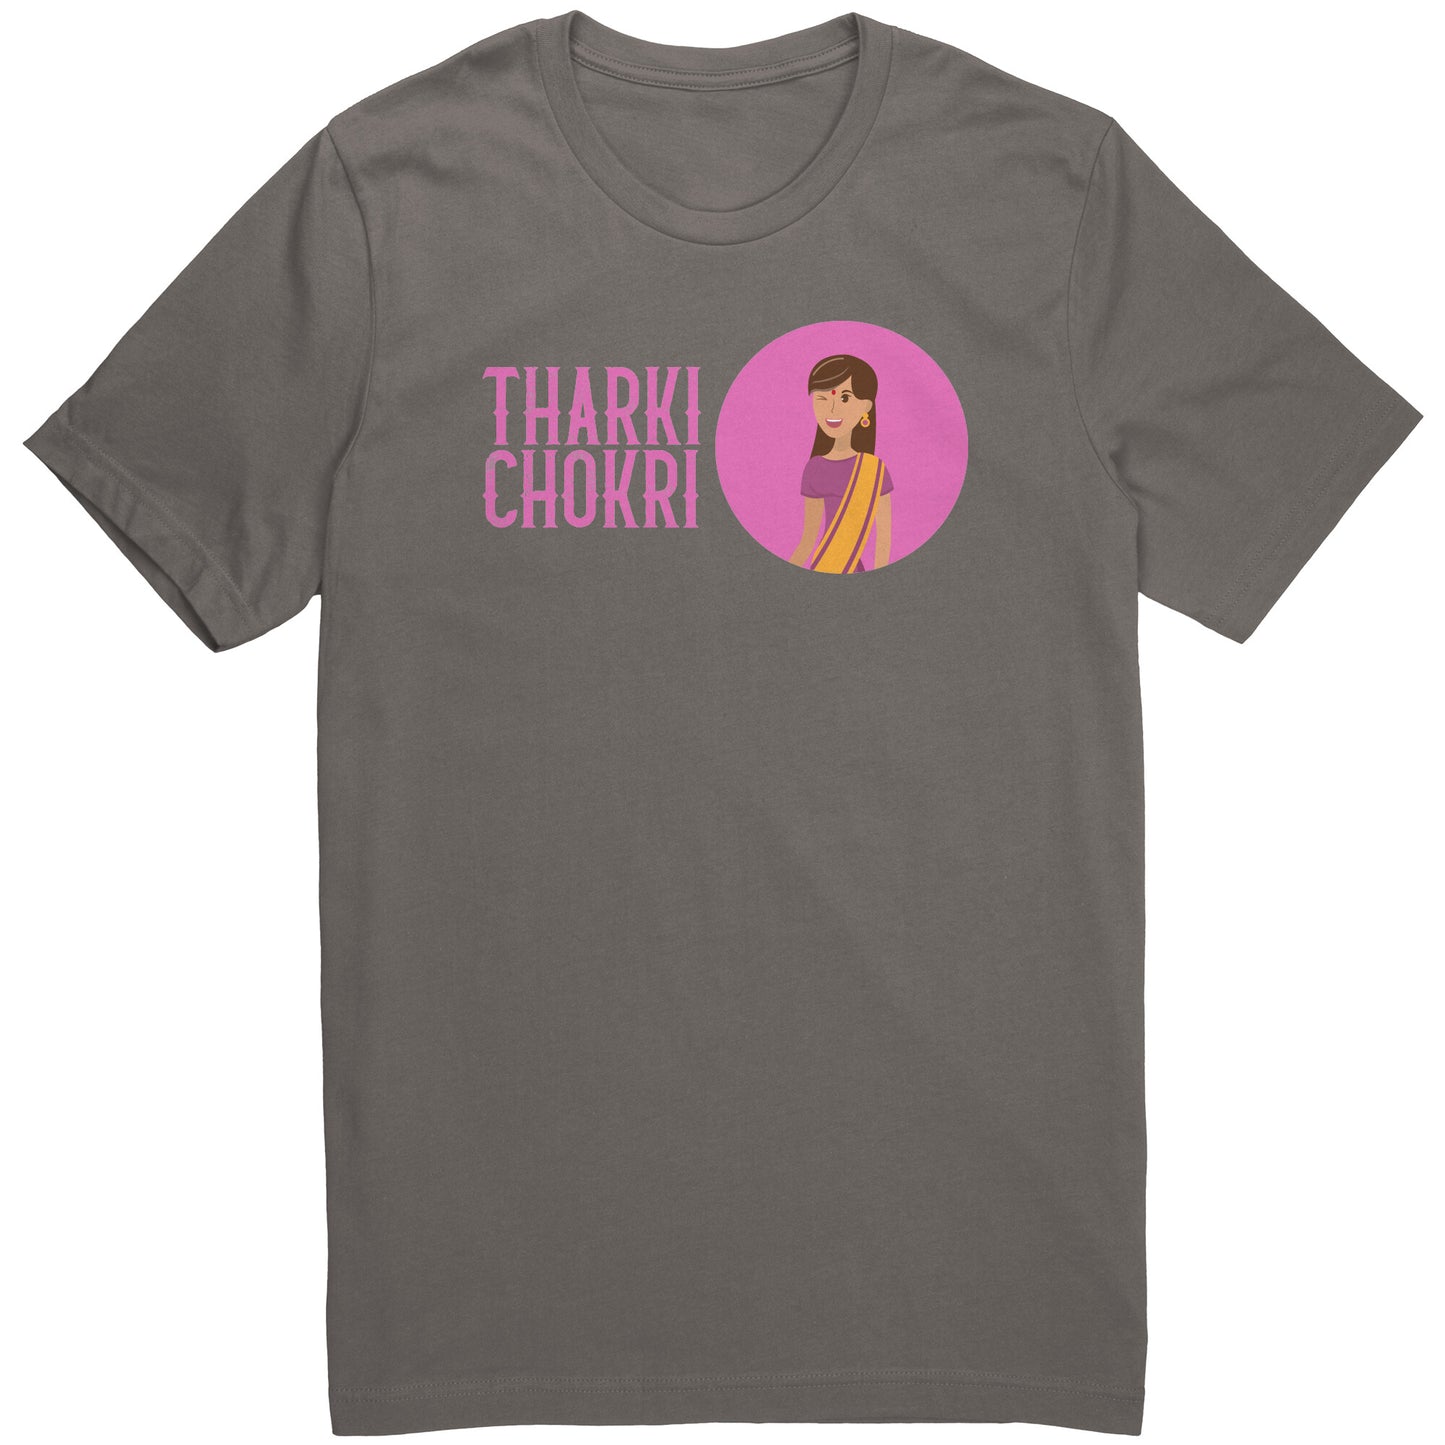 Tharki Chokri Shirts (Tank/Short/Long Sleeve Options)